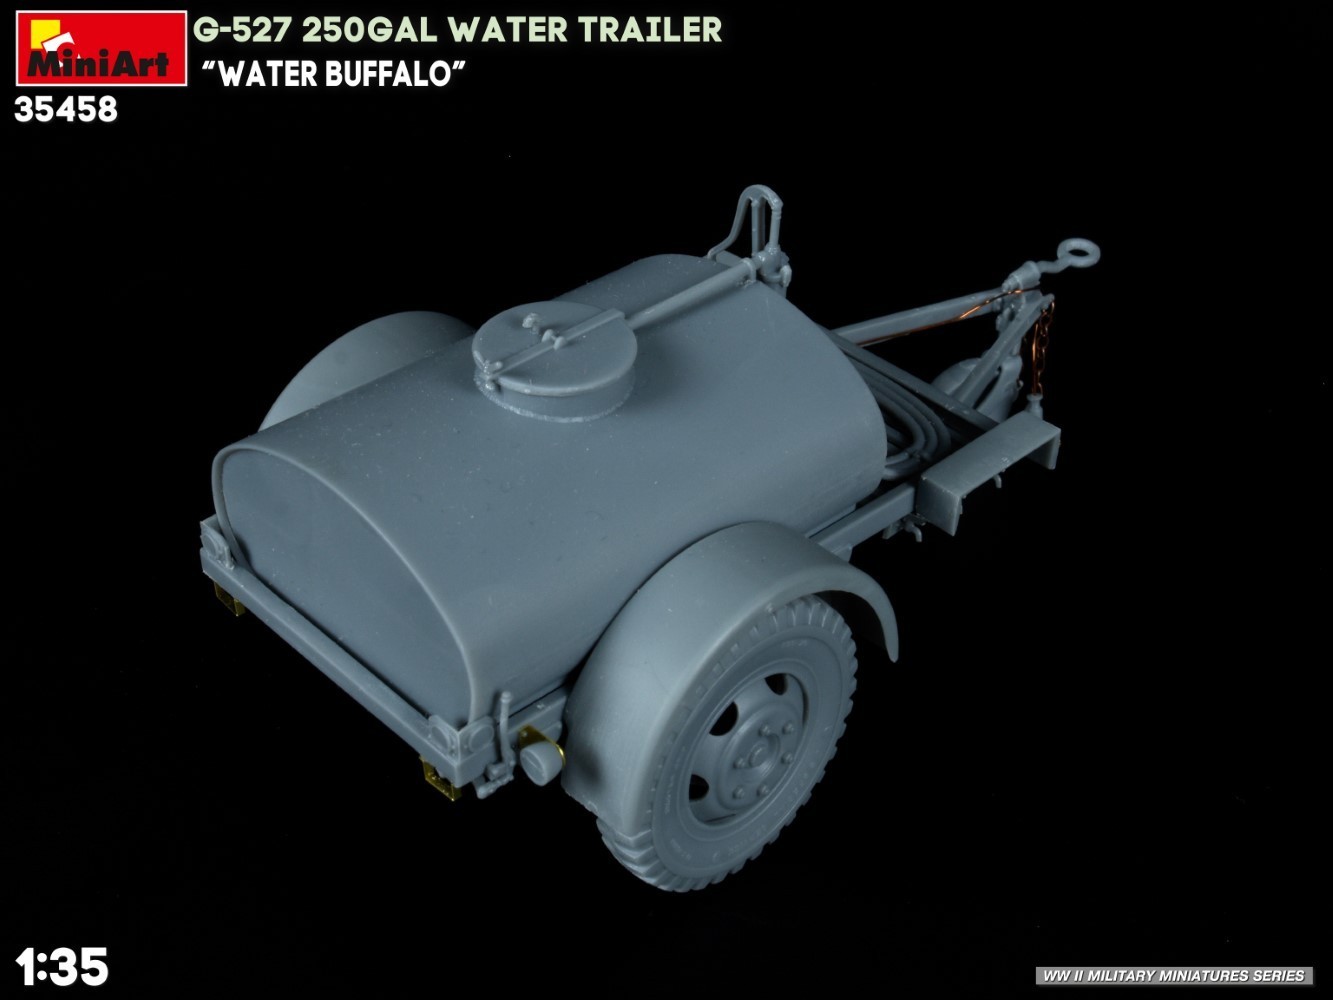 MiniArt G-527 250GAL Water Trailer “Water Buffalo” Test Build-8